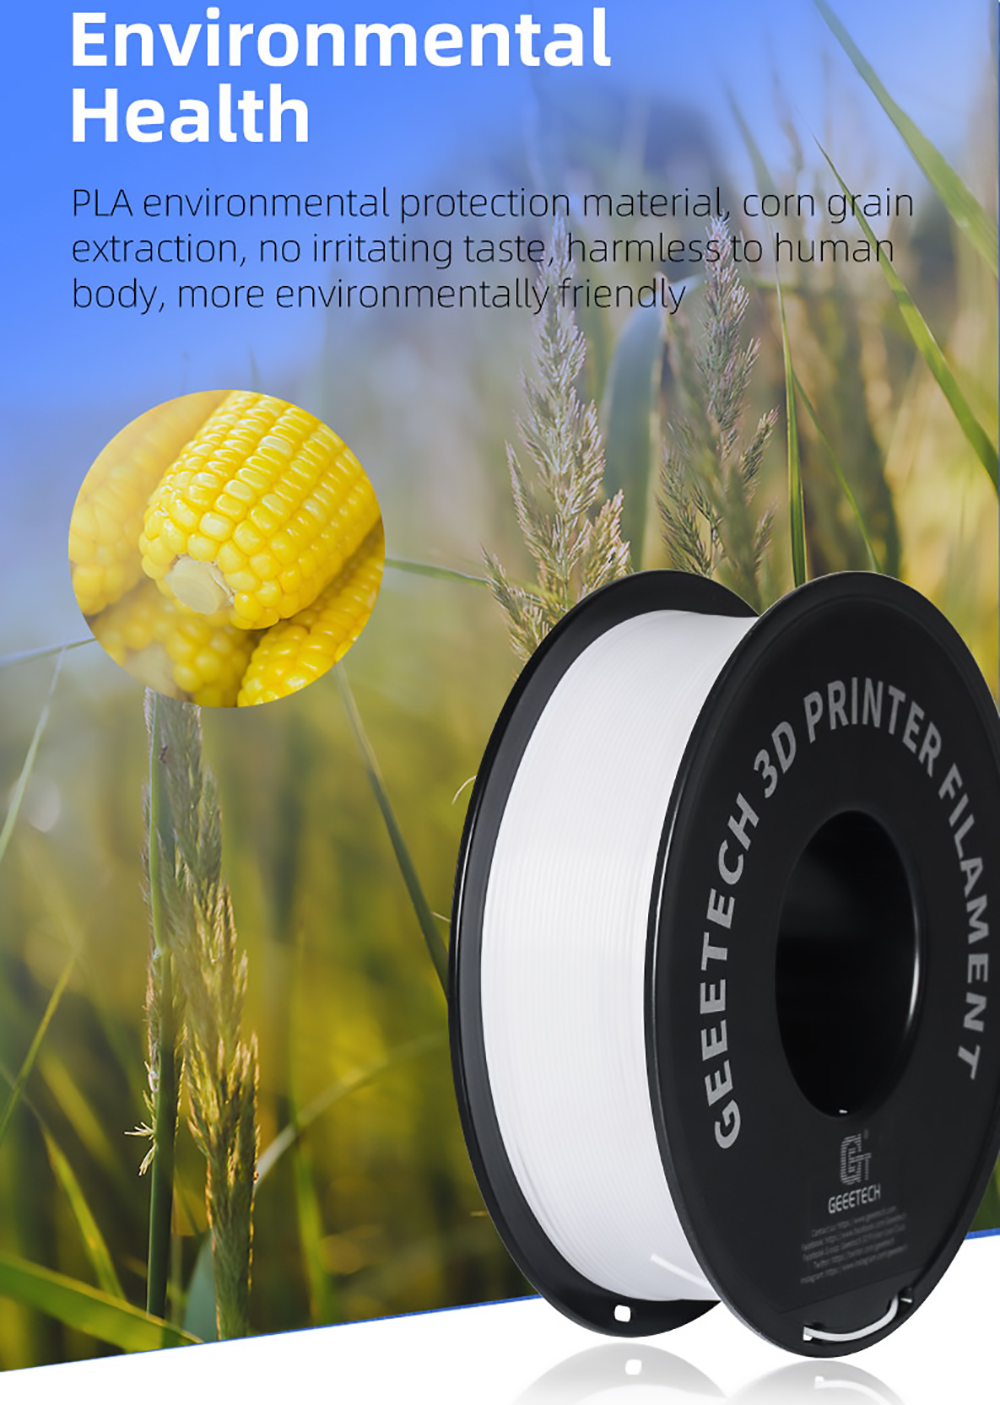 Geeetechreg-PLA-3D-Printing-Filament-BlackWhite-175mm-for-3D-Printing-1836019-4